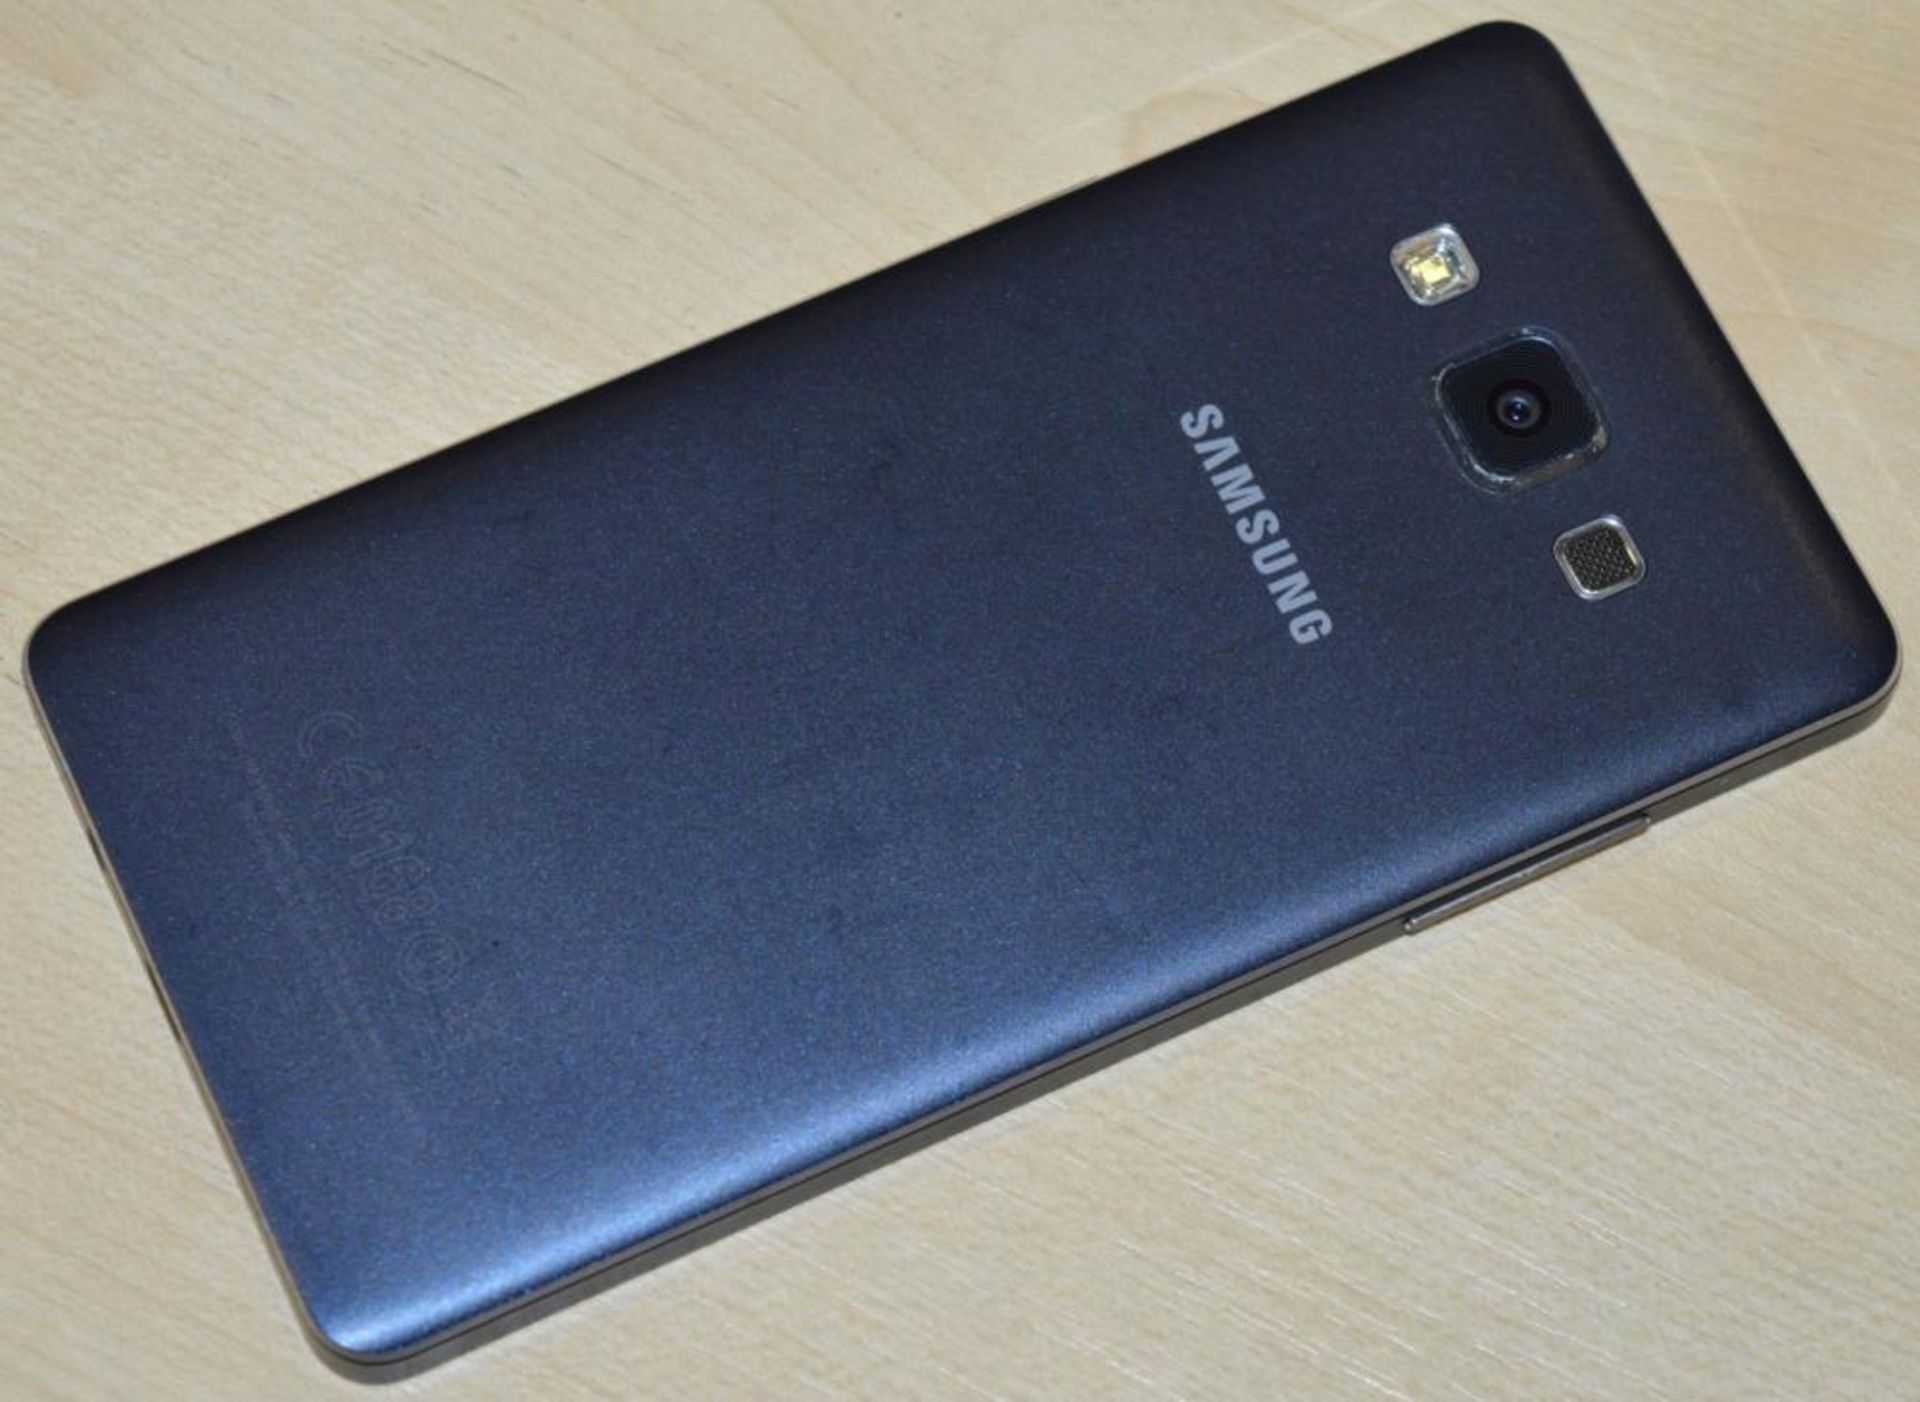 1 x Samsung Galaxy A5 16gb Smart Phone - Model SM-A500FU - Midnight Black - CL285 - Ref J0000 - - Image 2 of 3